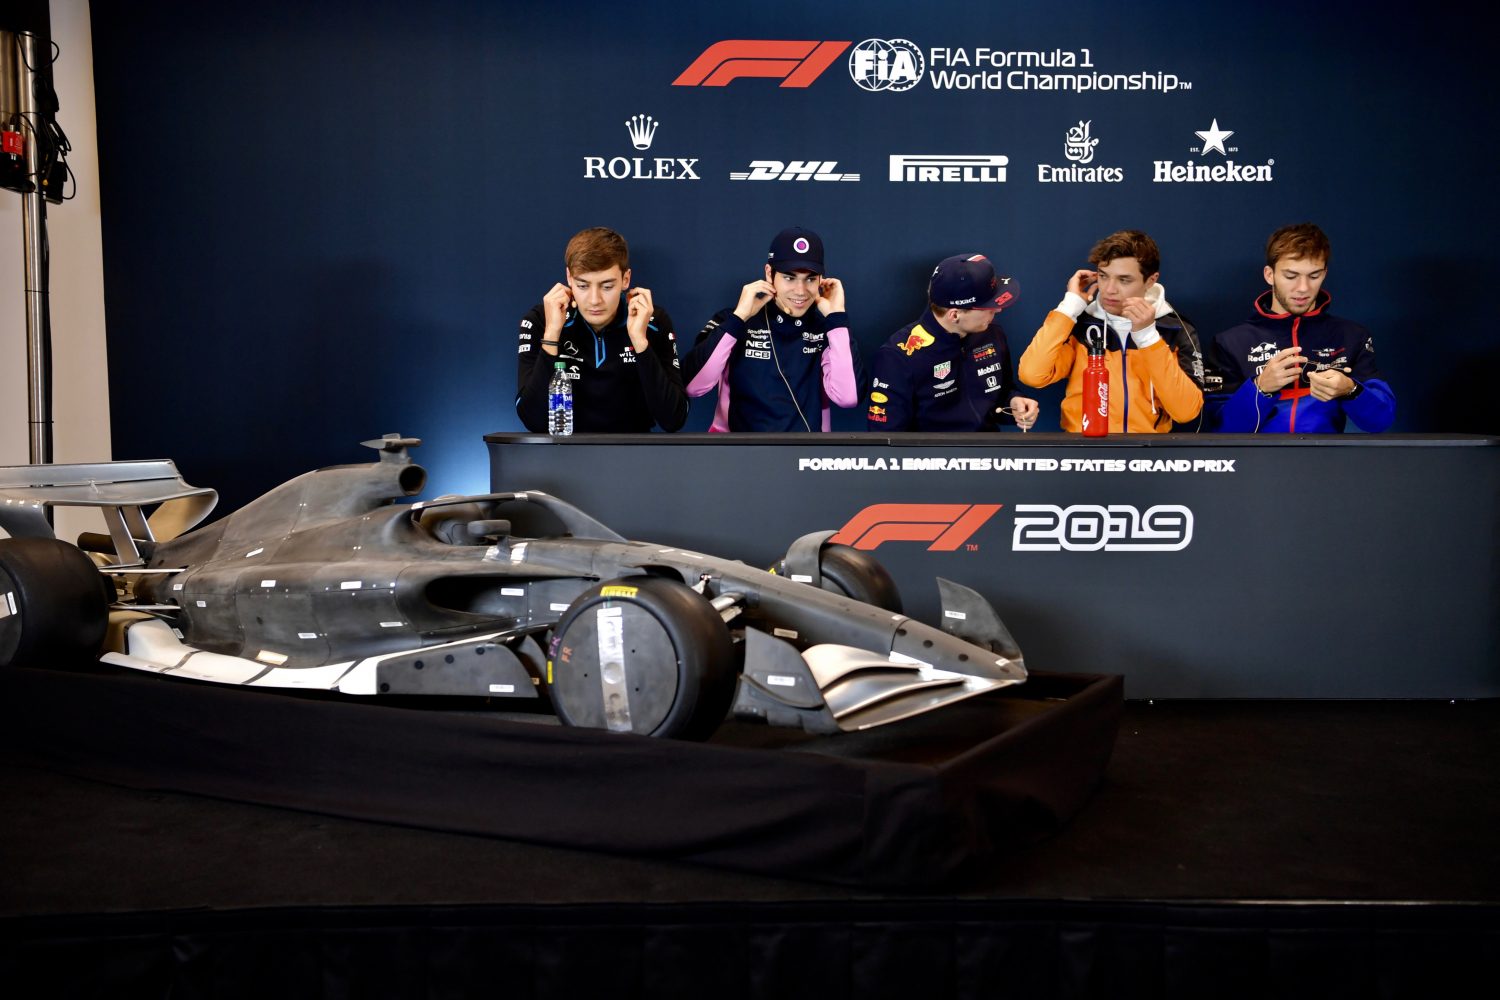 Formule 1 In 2022 - Q668foe0w43cam / The 2022 fia formula one world